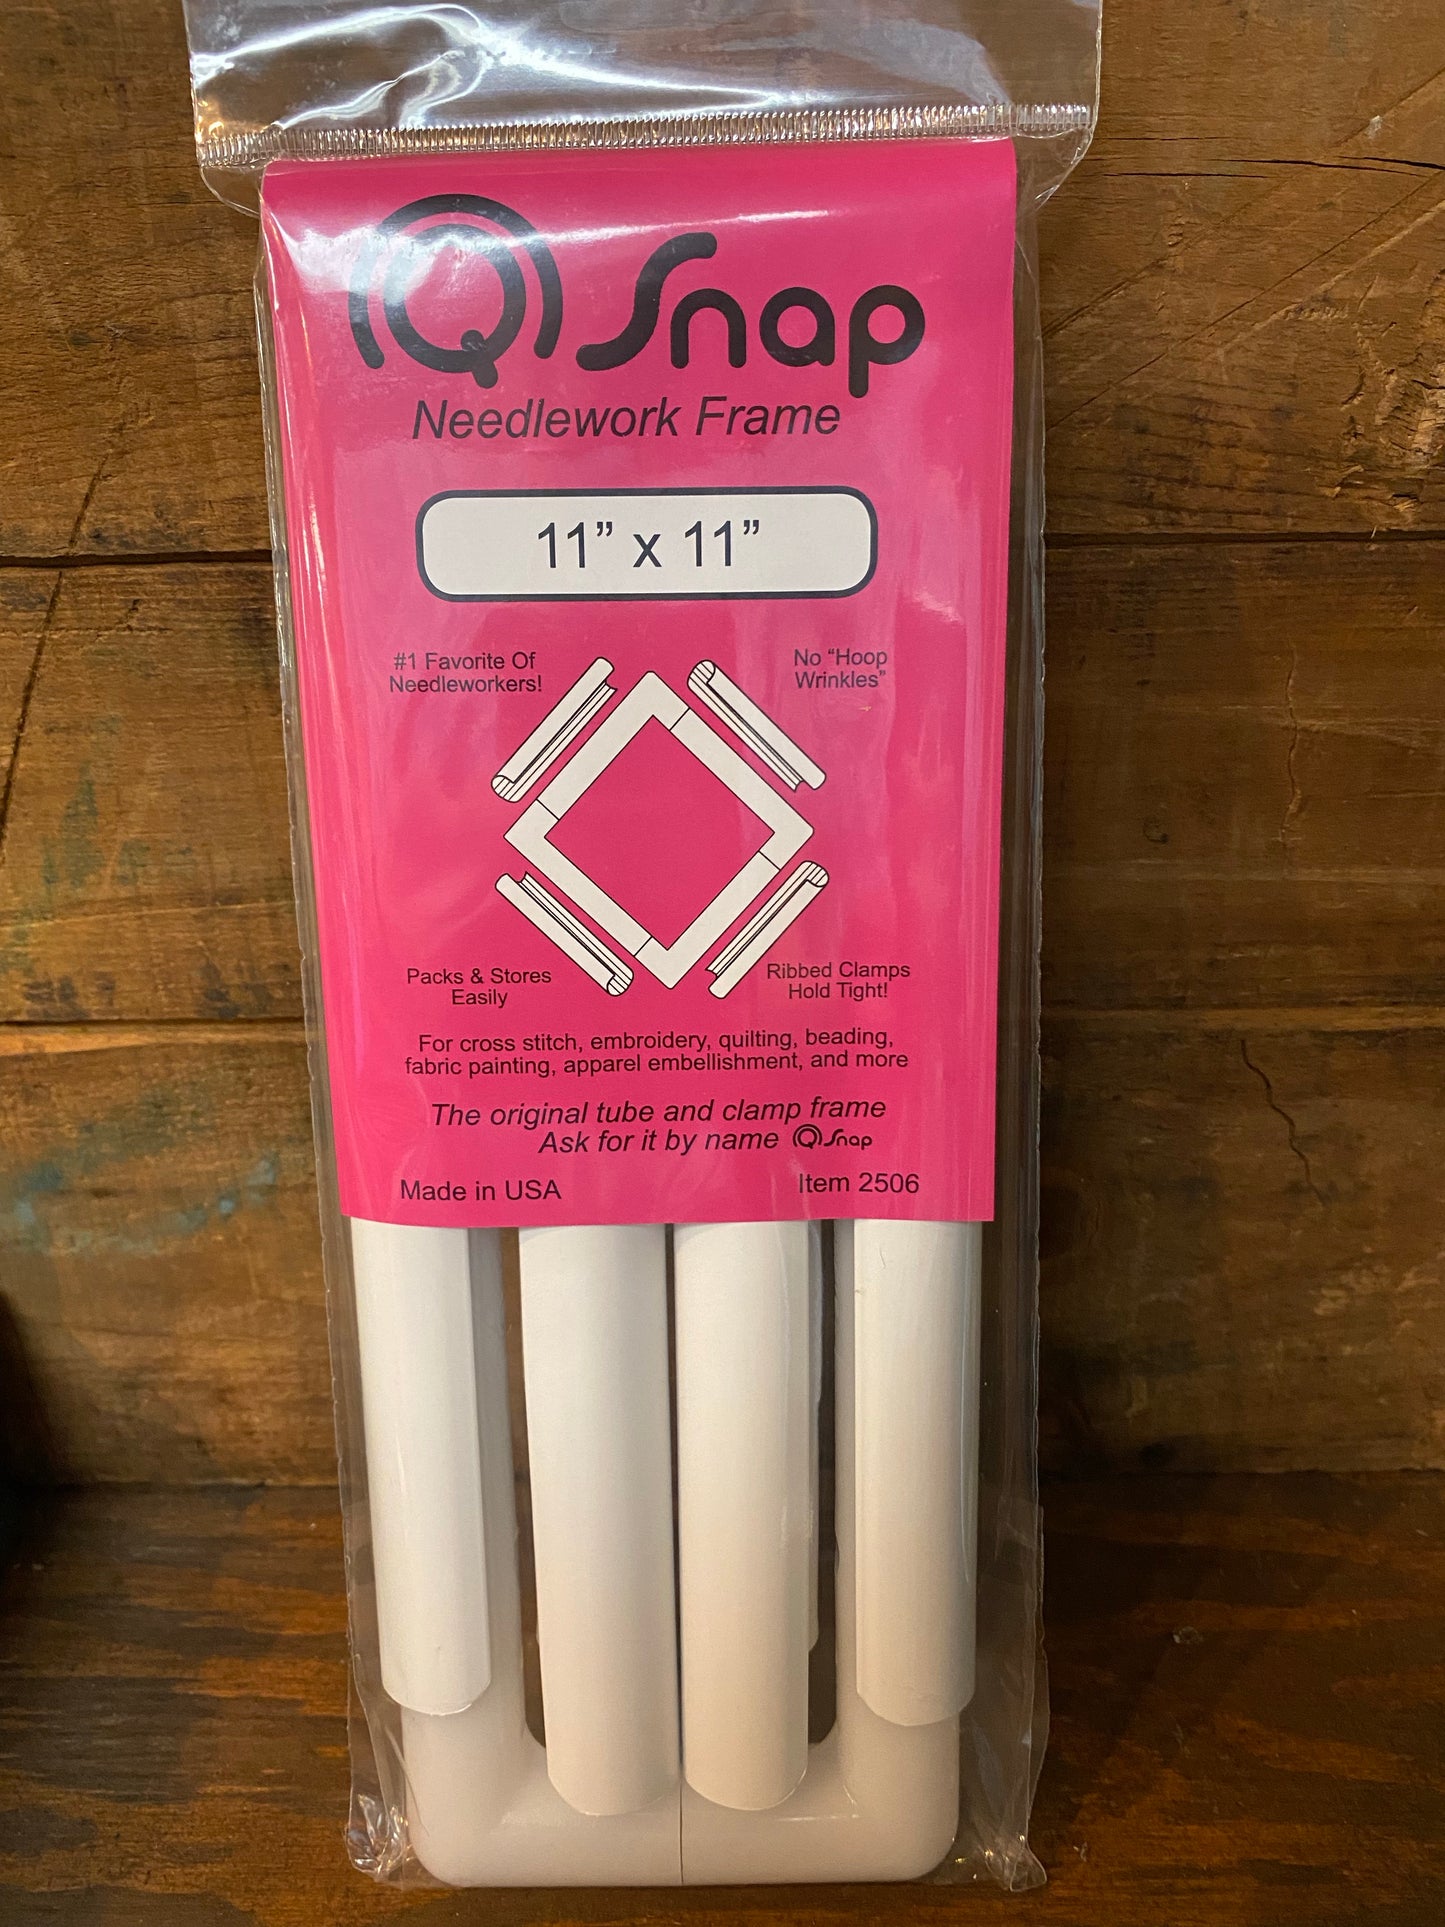 Q Snap Needlework Frame, 11”x11”